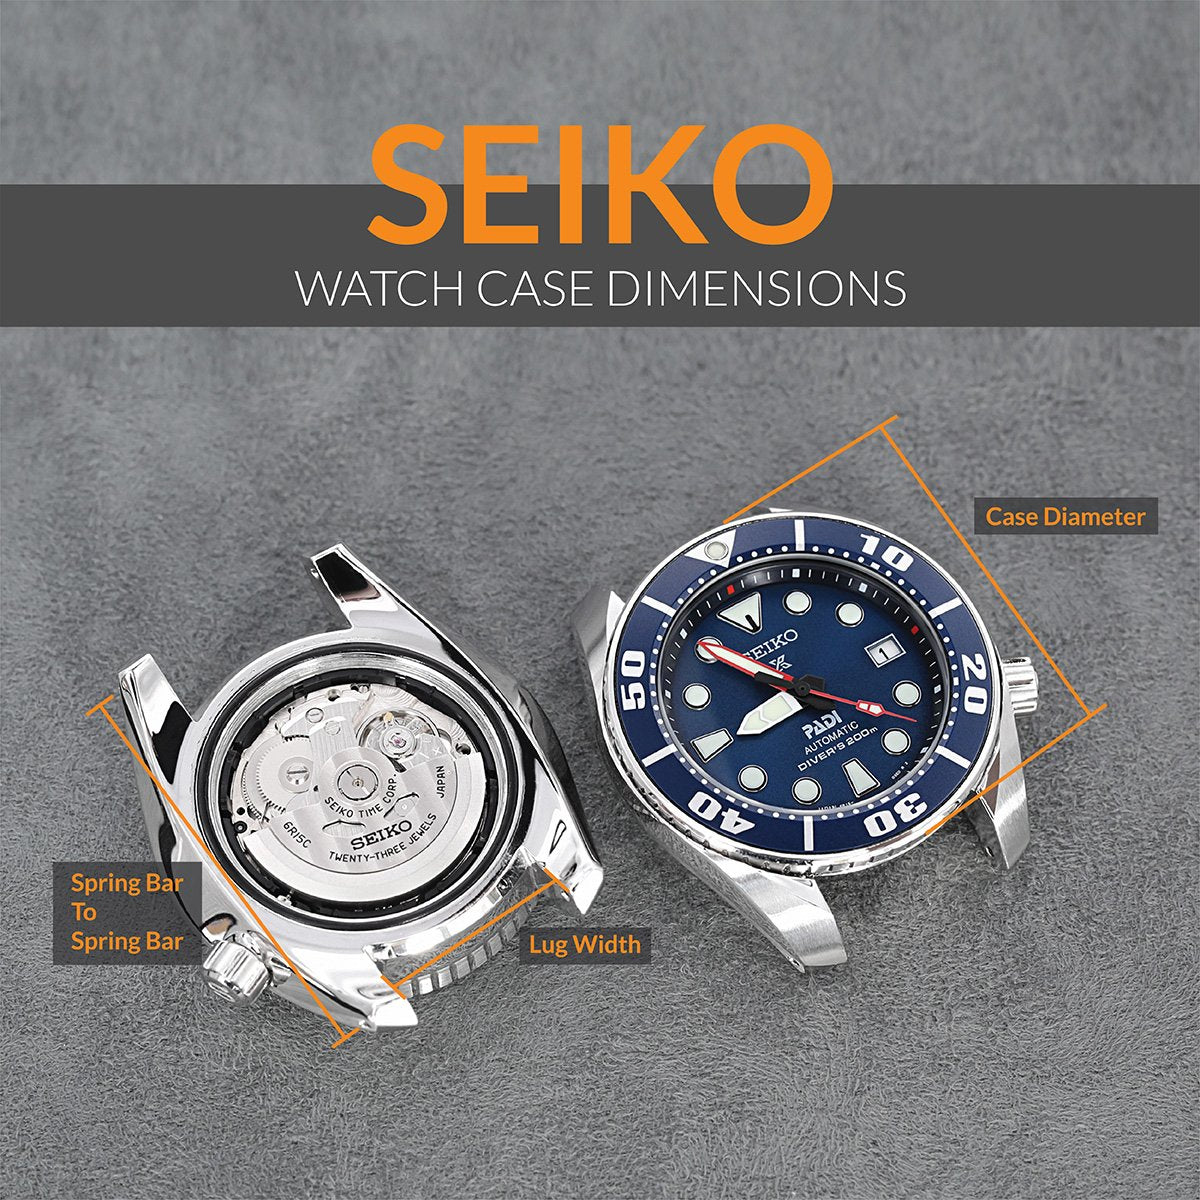 Seiko Watch Cases Dimension